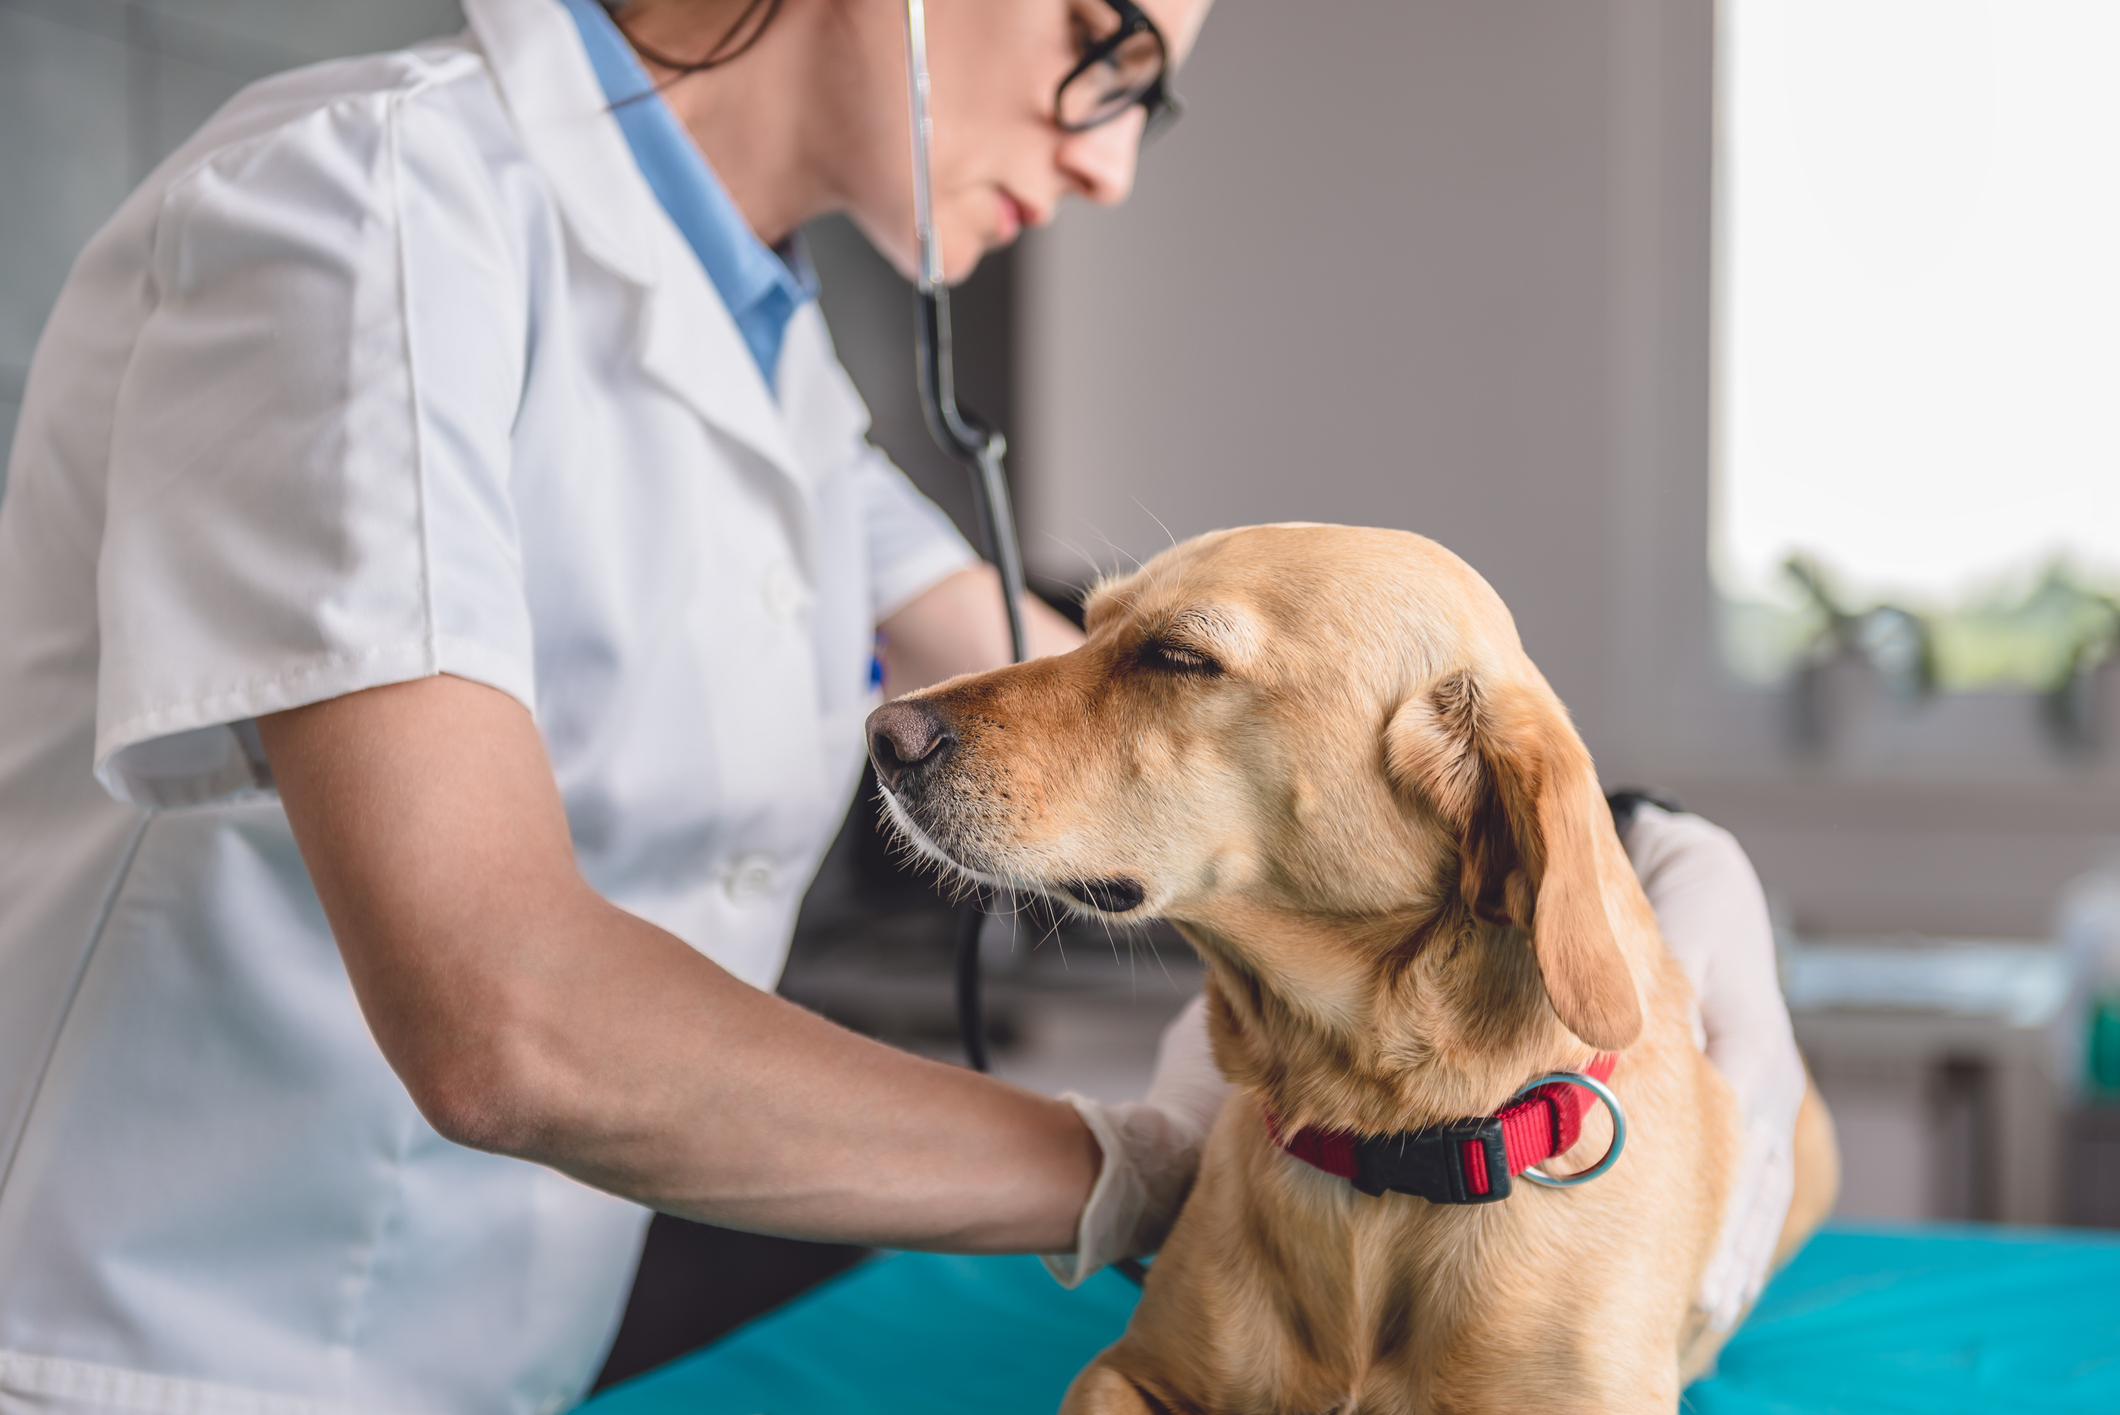 A Labrador retriever gets a checkup from a female veterinarian with a stethoscope 